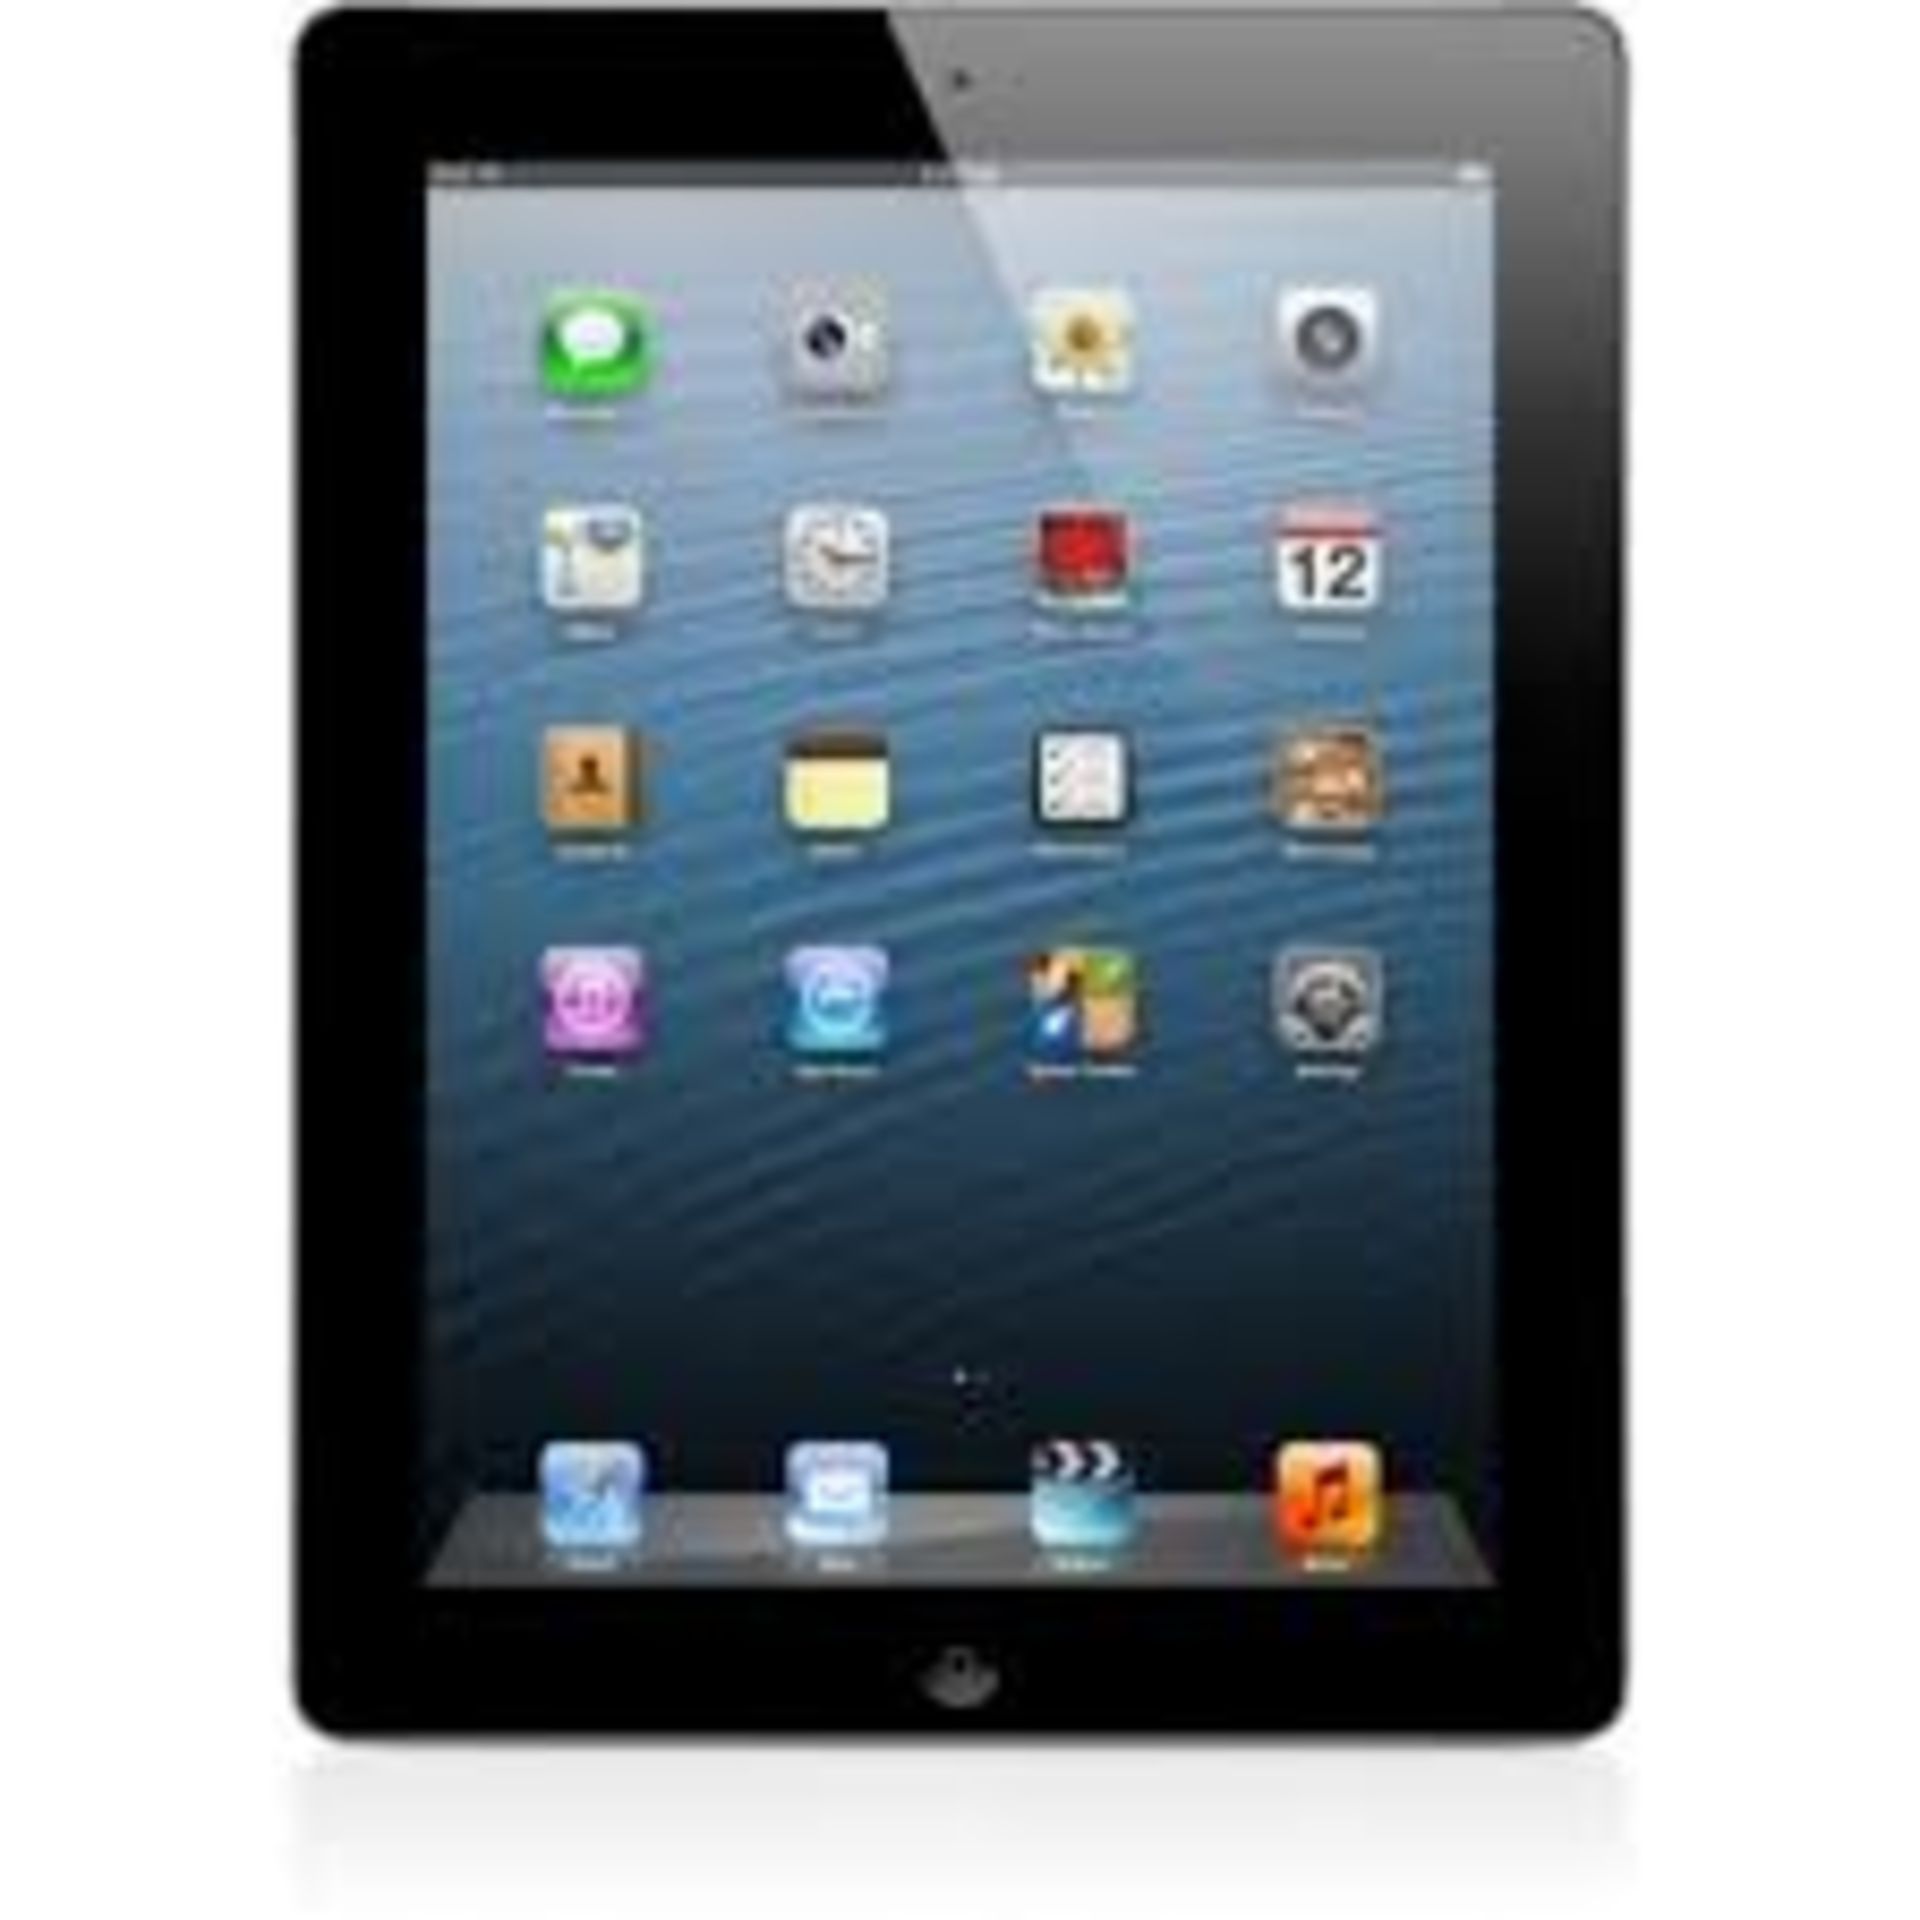 V Grade B Apple iPad 4 Black 16gb 4g Wi-Fi In Generic Box X 2 YOUR BID PRICE TO BE MULTIPLIED BY